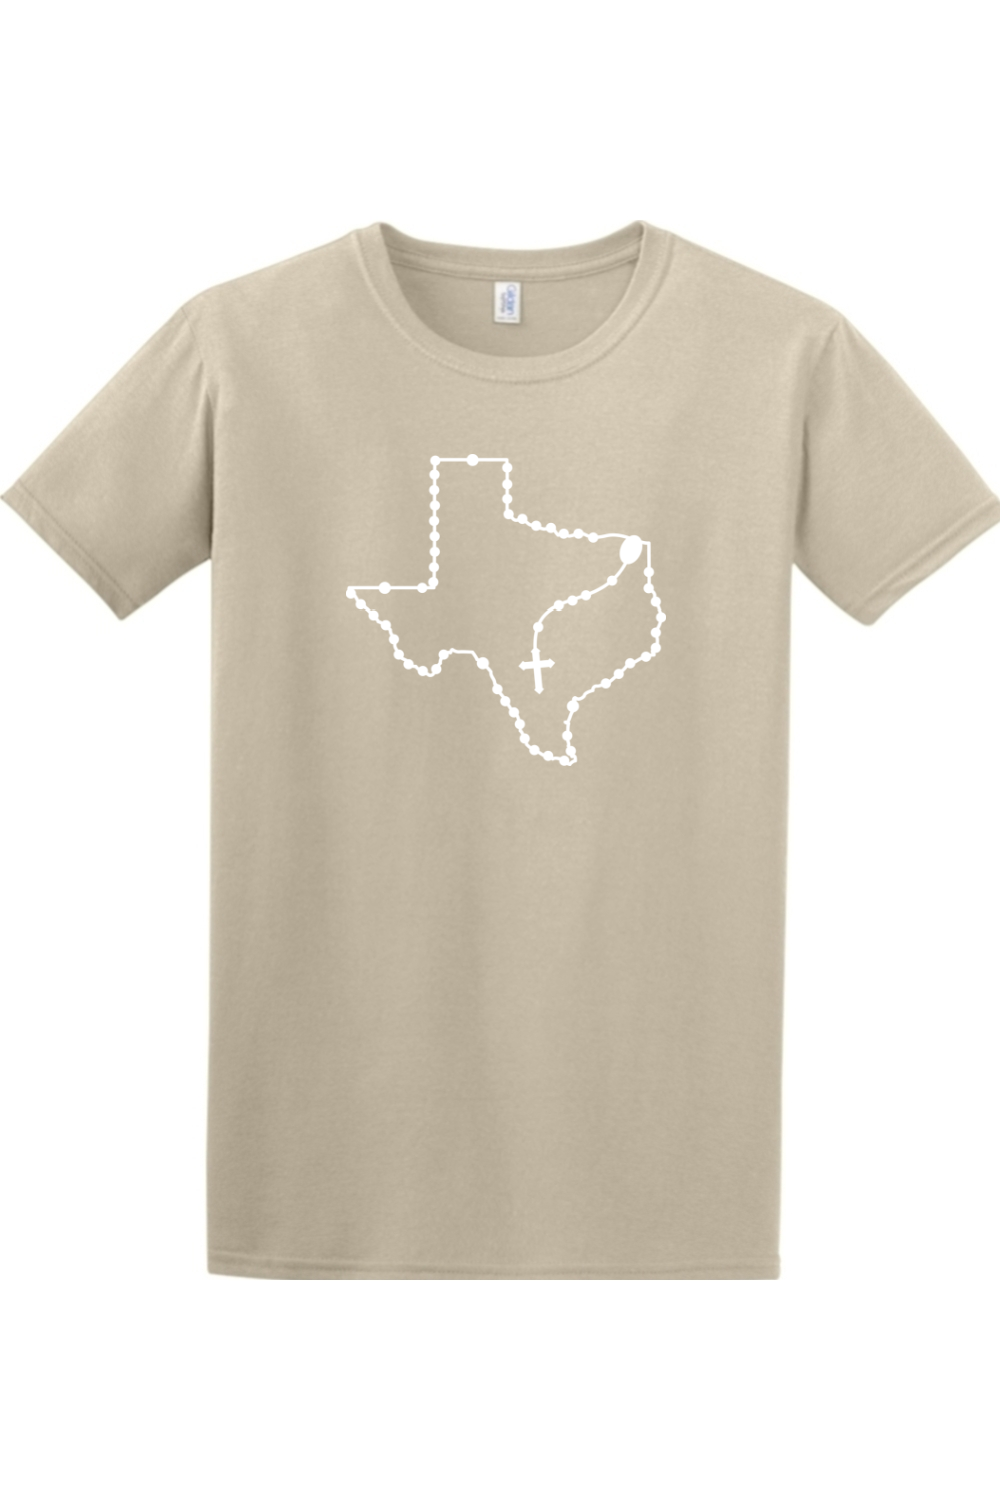 Texas Rosary Adult T-shirt